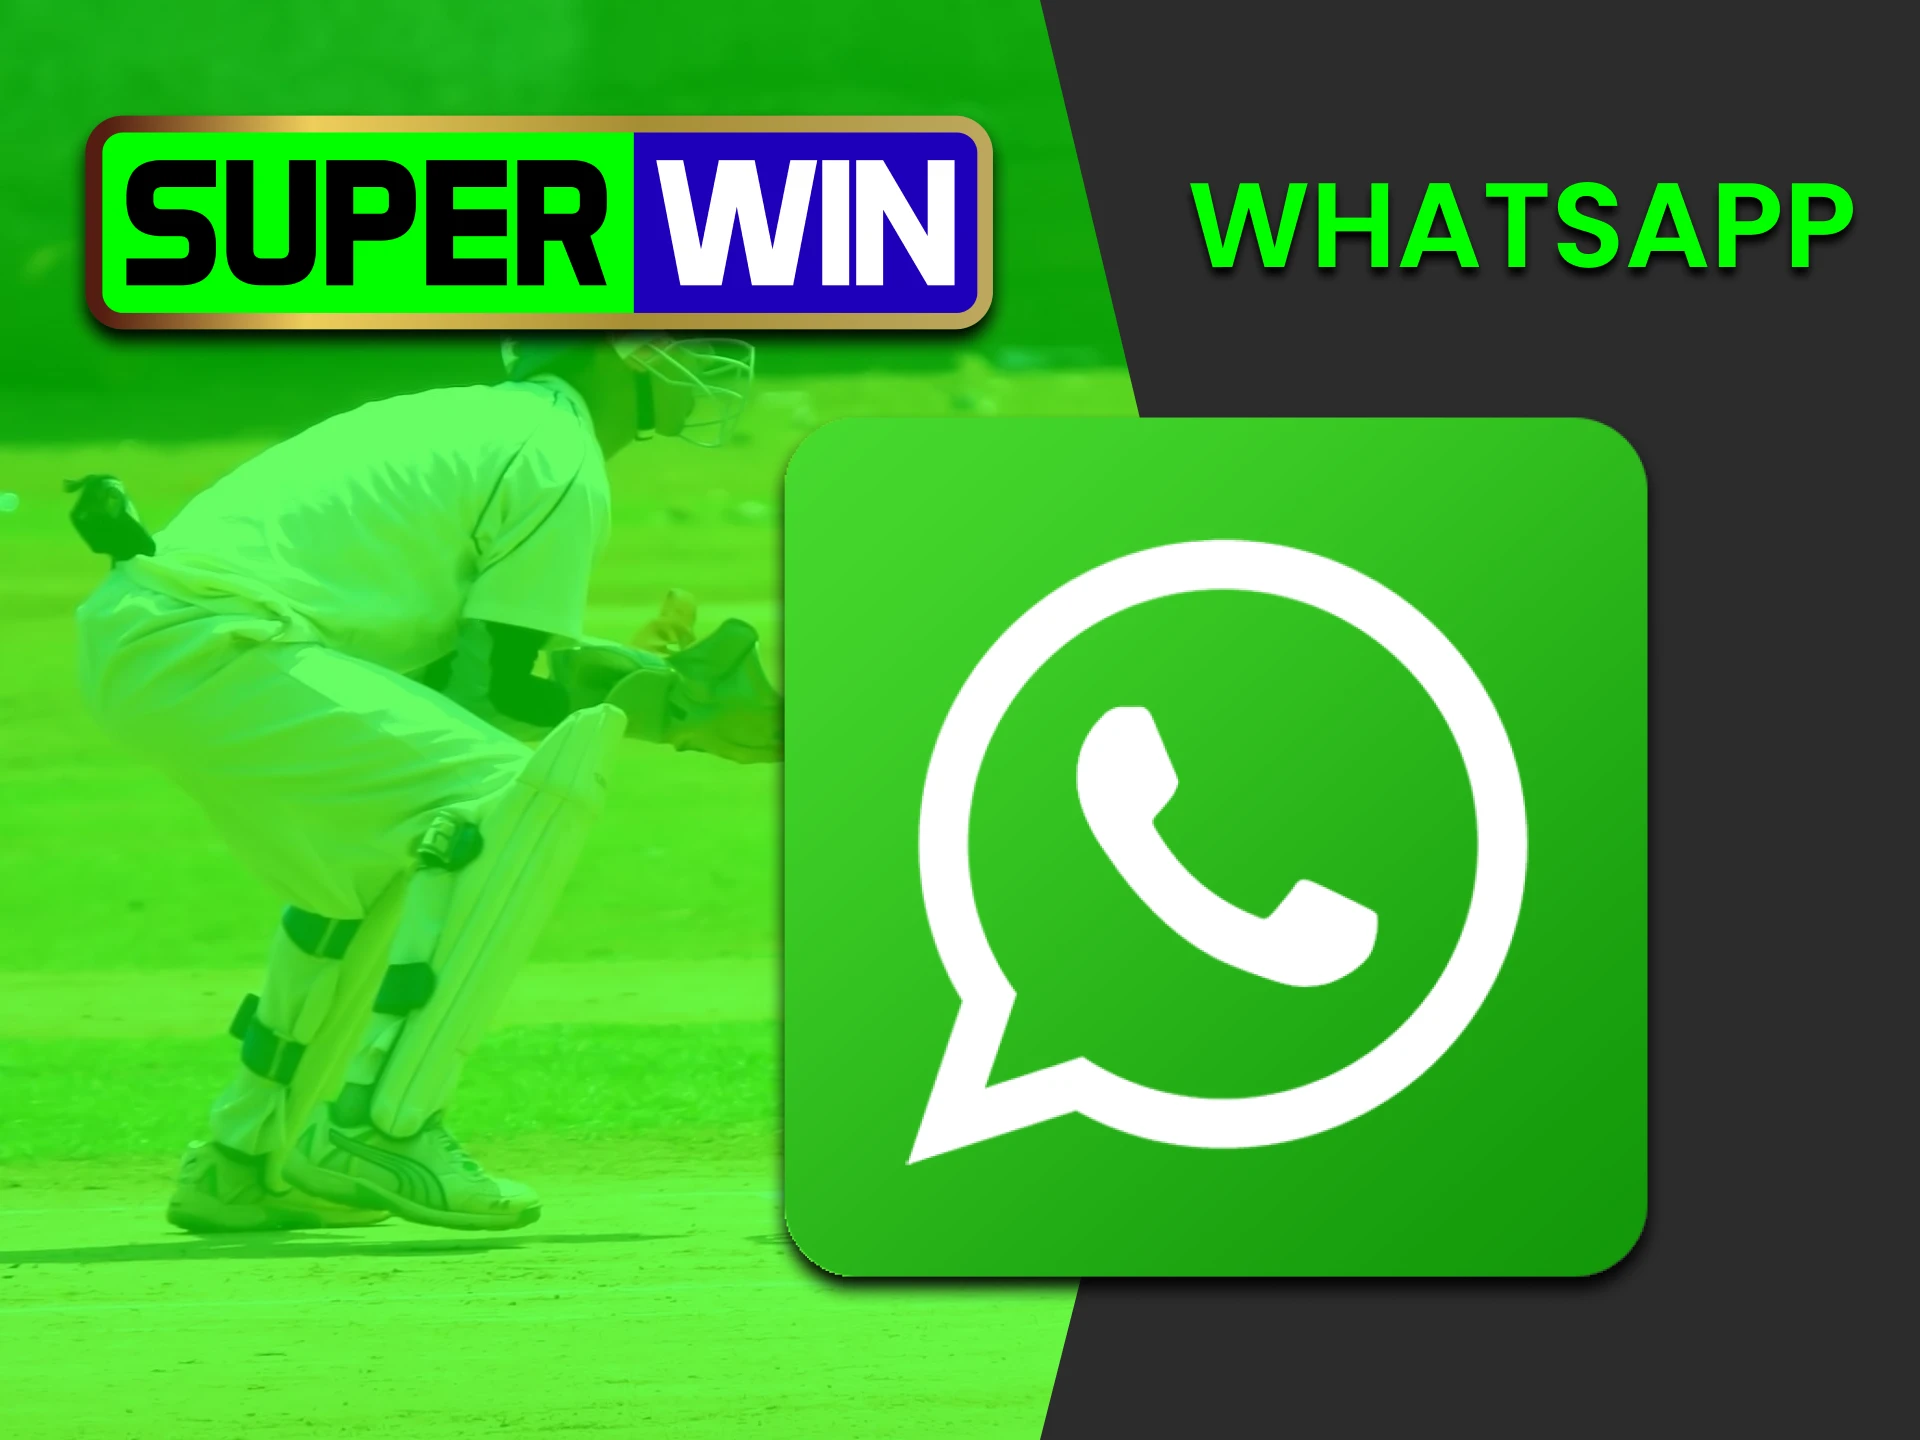 You can contact the Superwin team via Whatsapp.